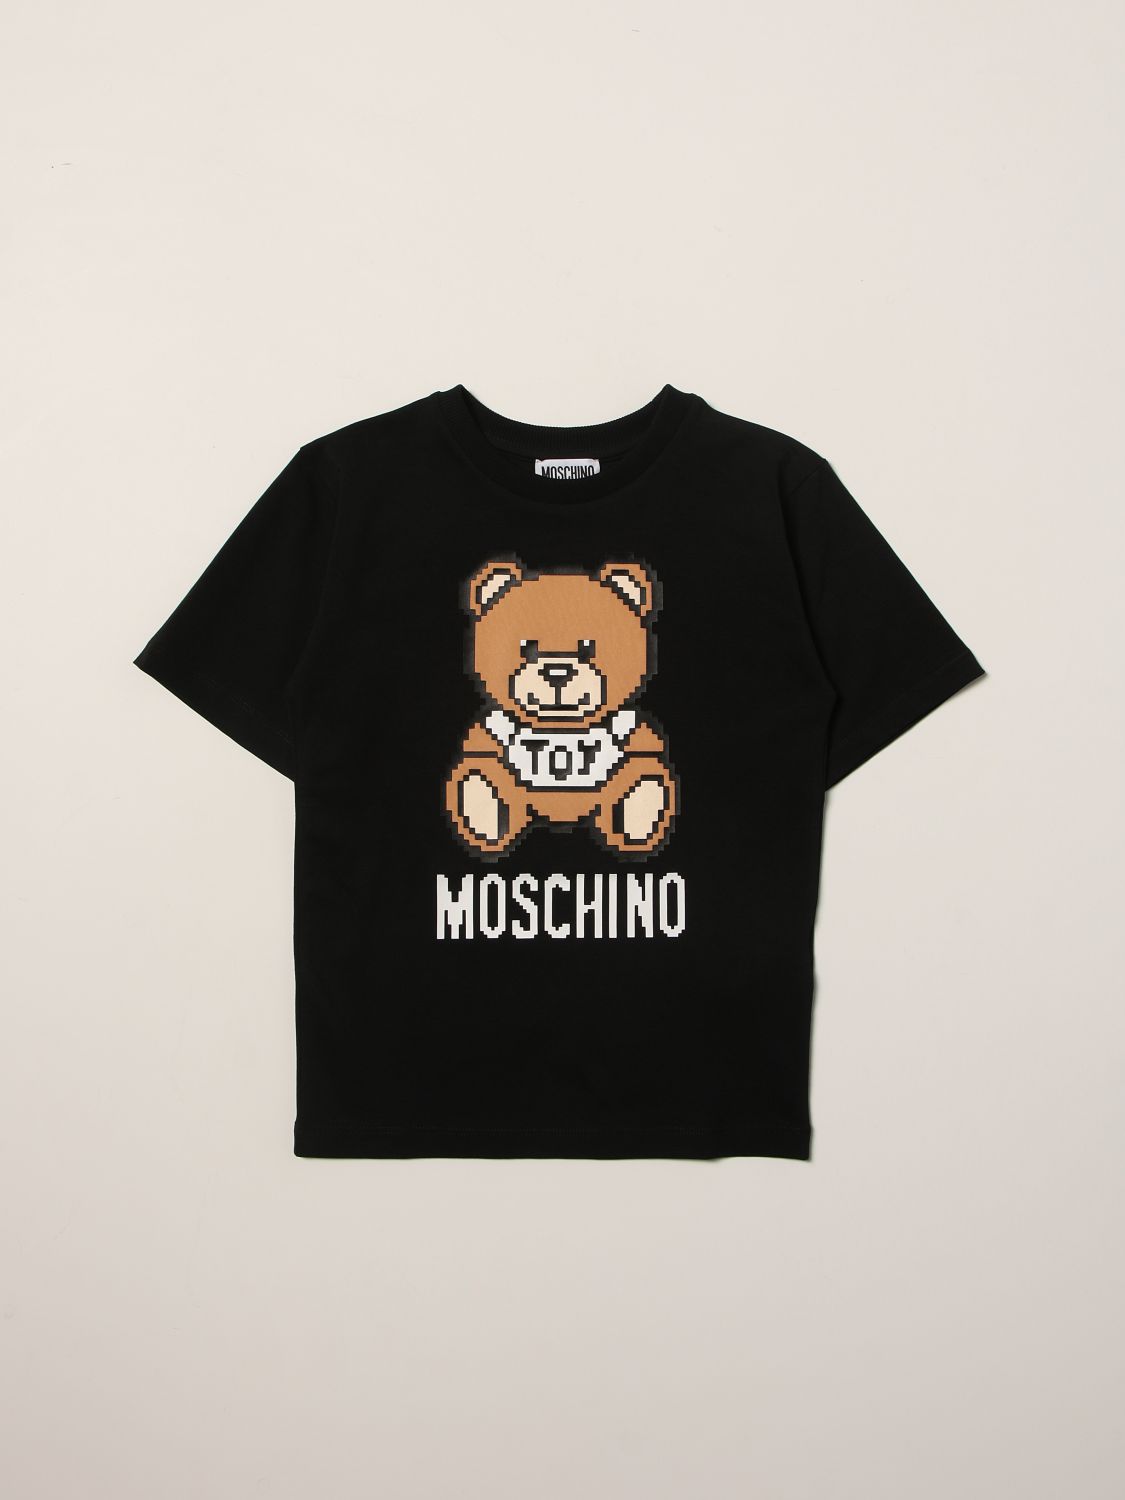 MOSCHINO KID: T-shirt with Teddy Pixel print - Black | Moschino Kid t ...